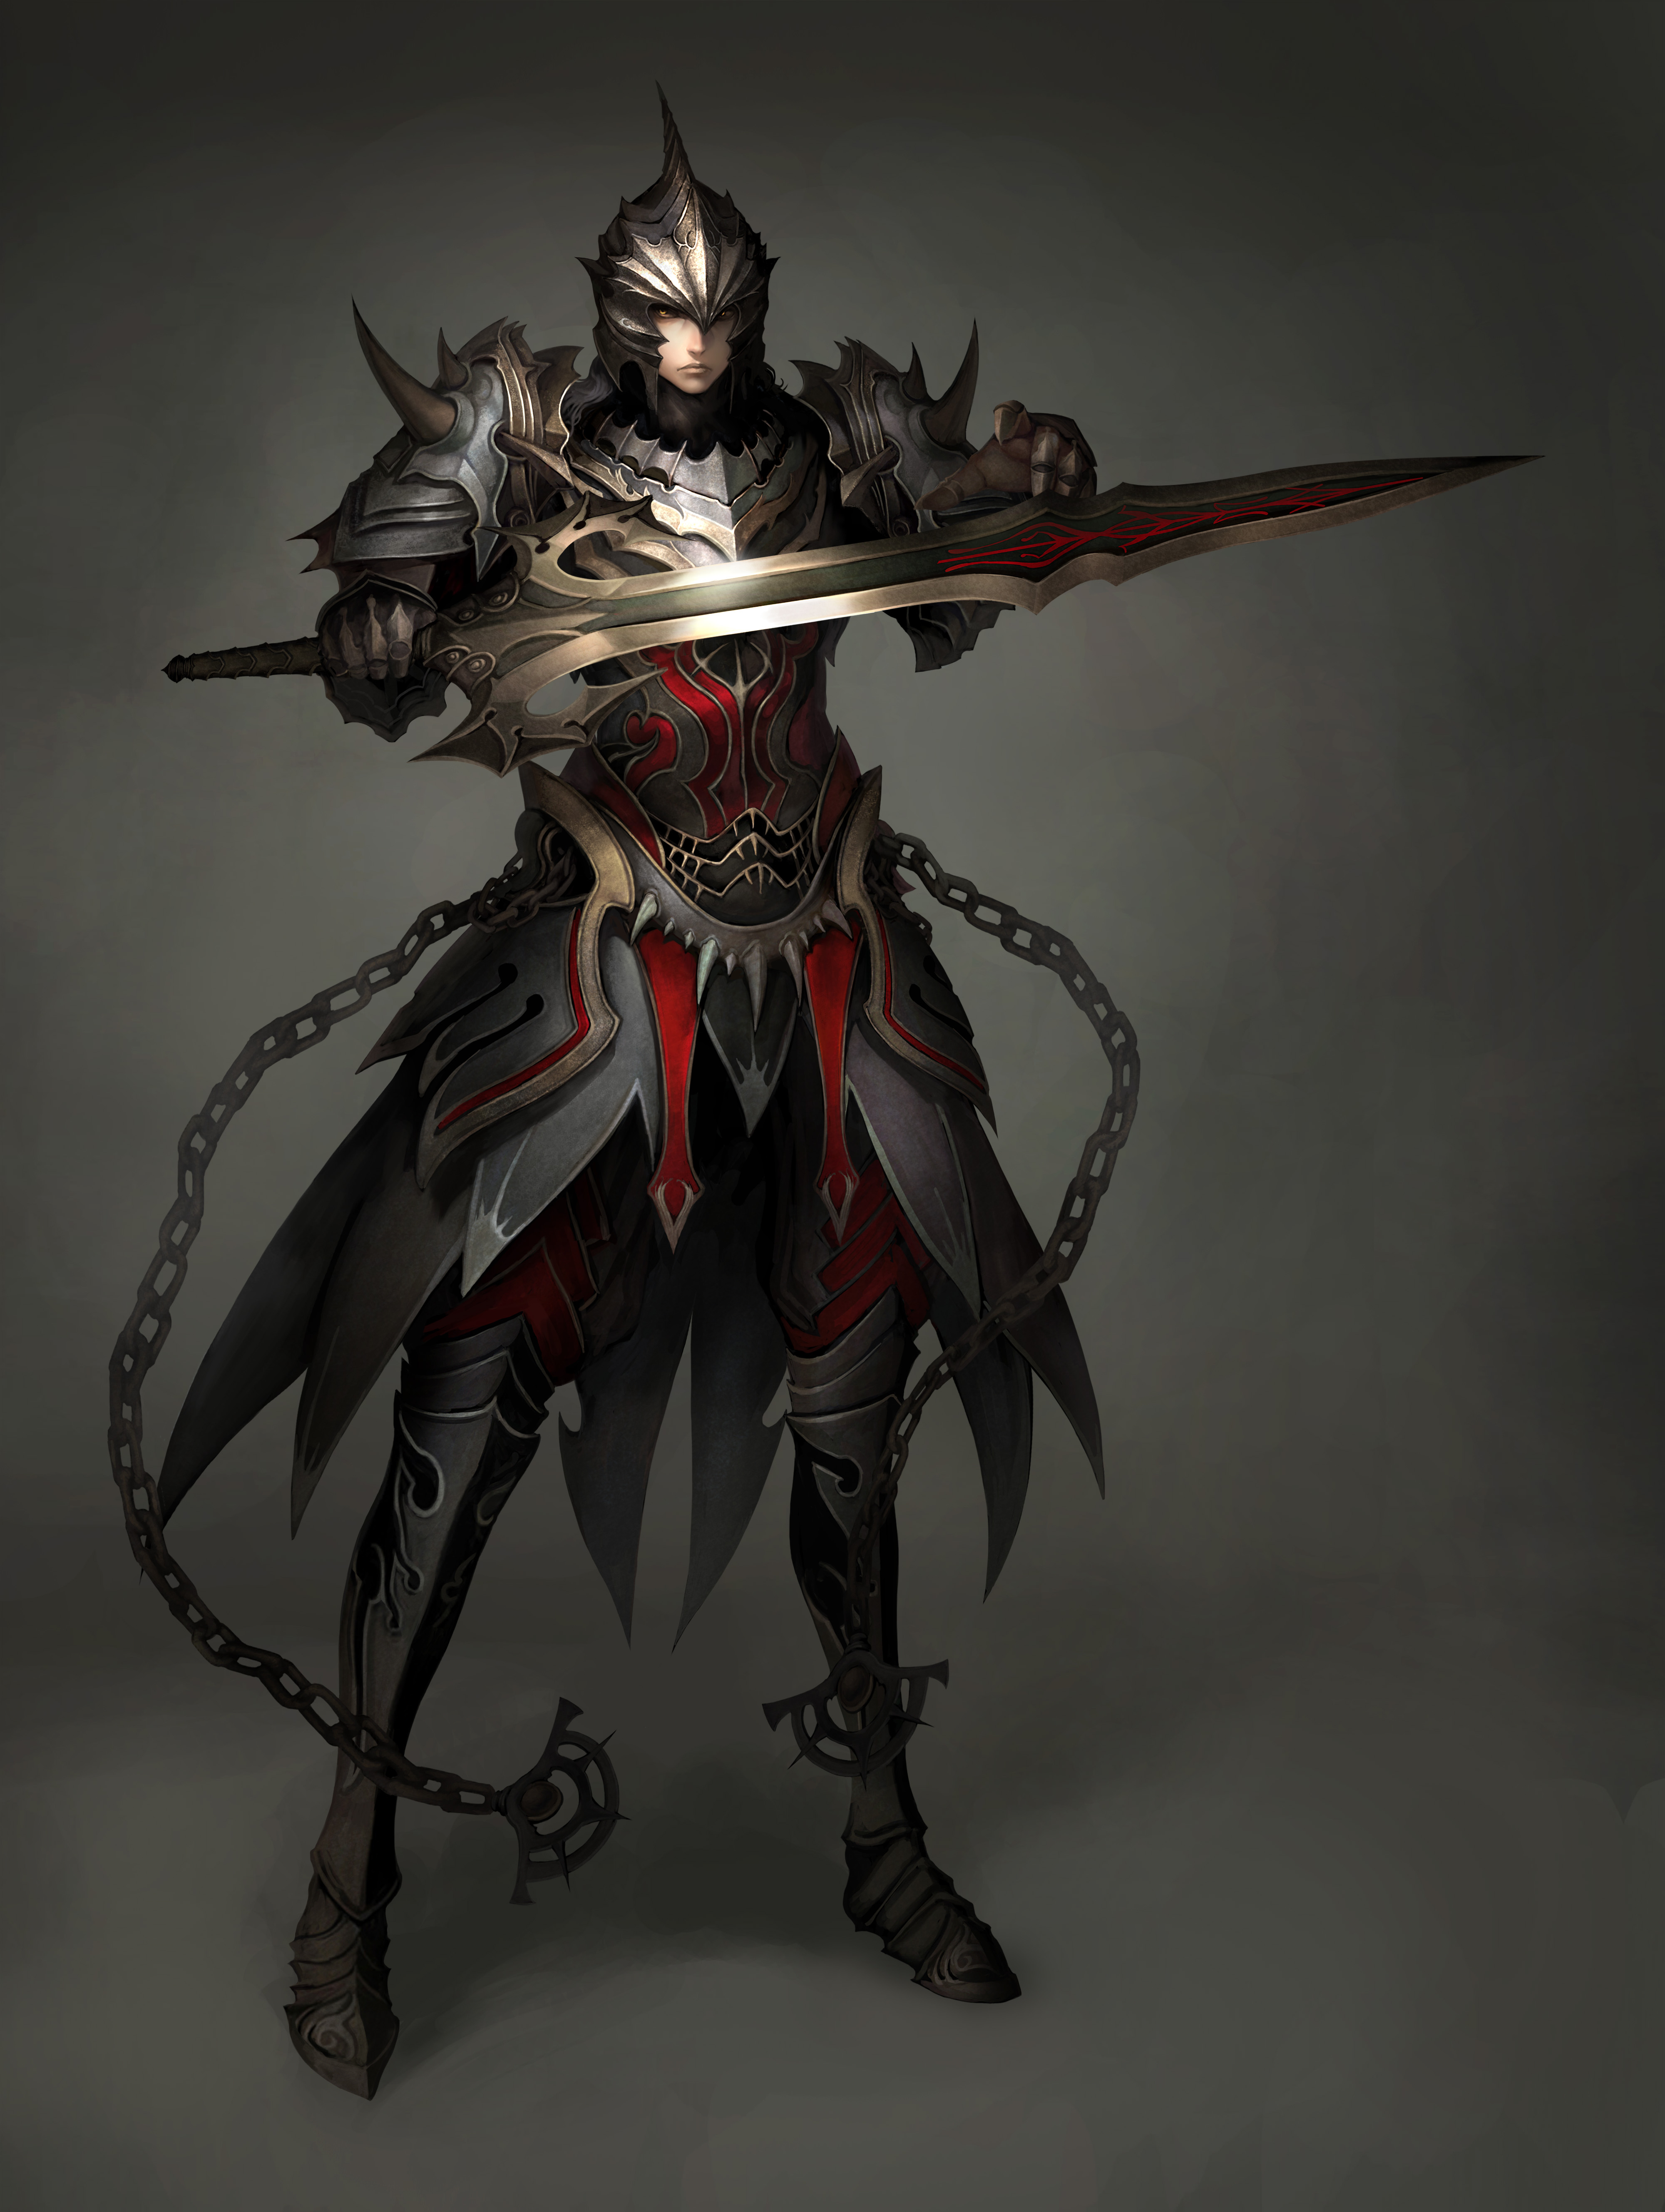 weapons, armor, artwork, chains, swords - desktop wallpaper